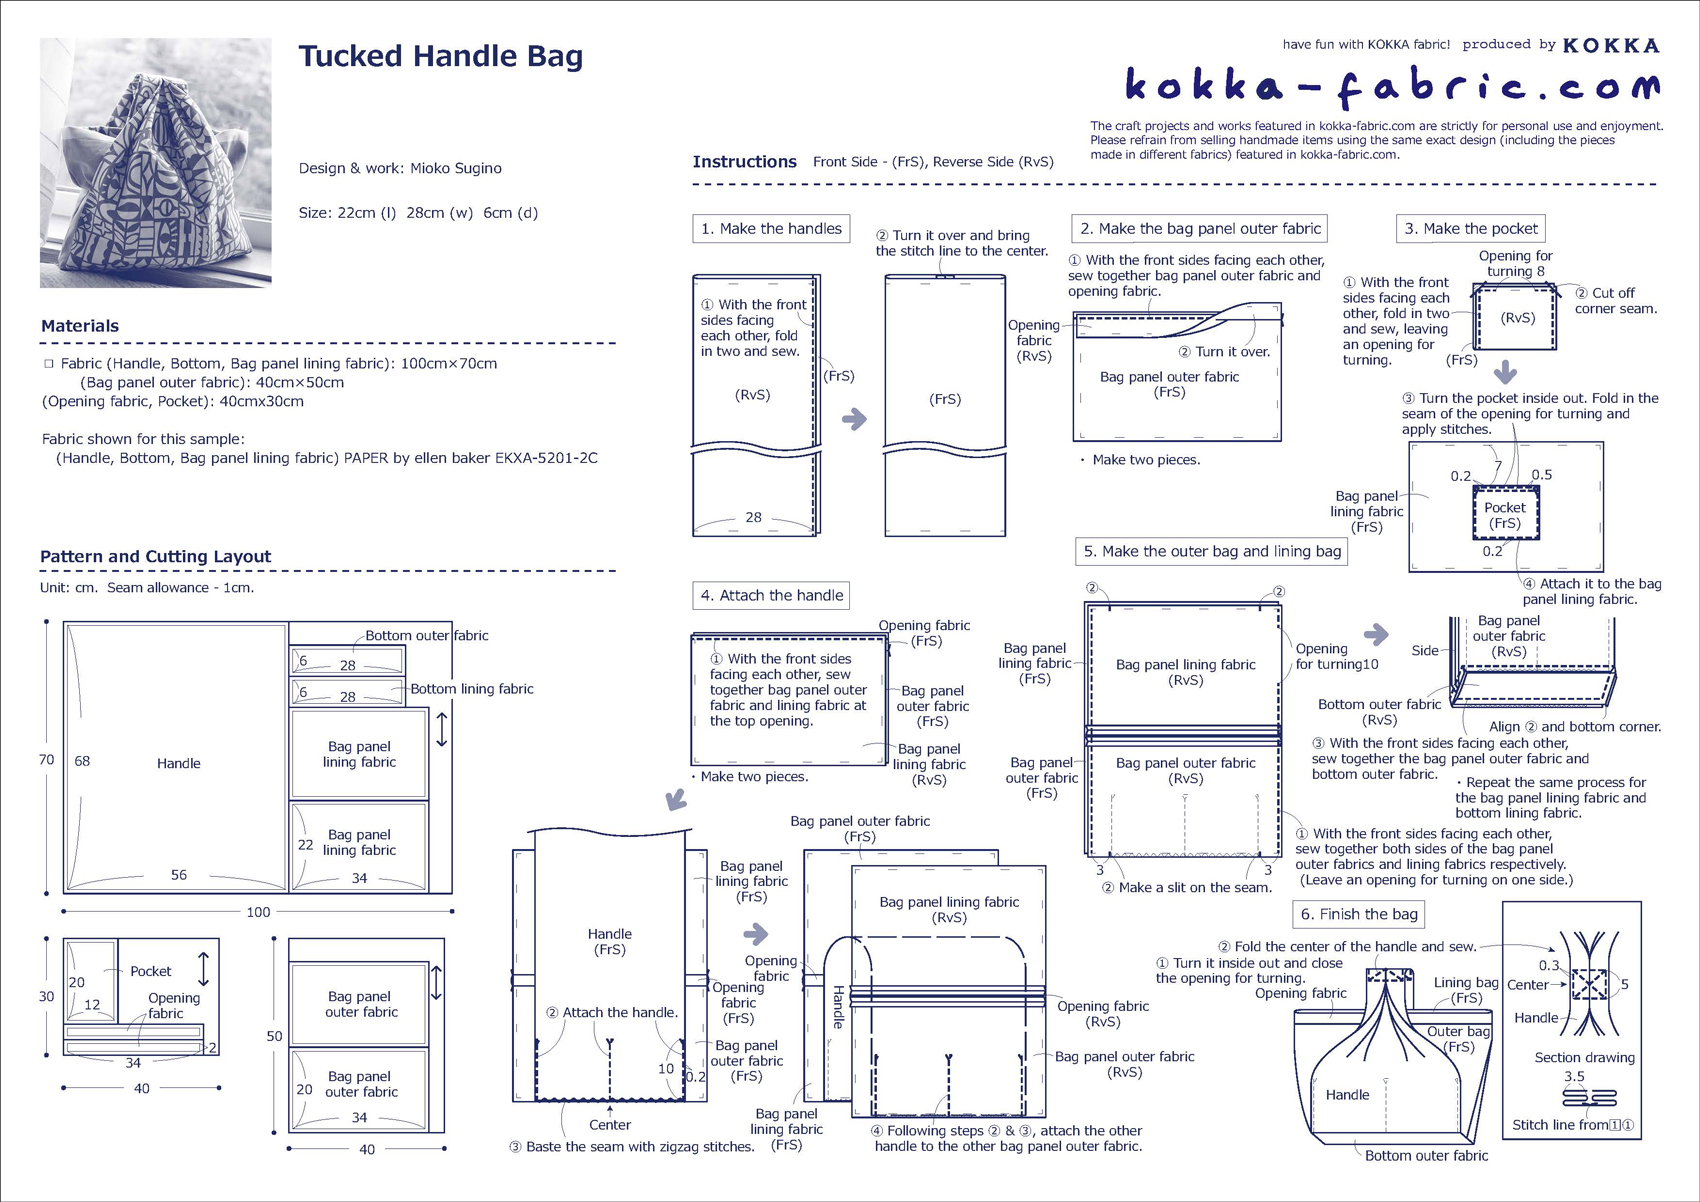 Tucked Handle Bag Sewing Instructions | KOKKA-FABRIC.COM | have fun ...